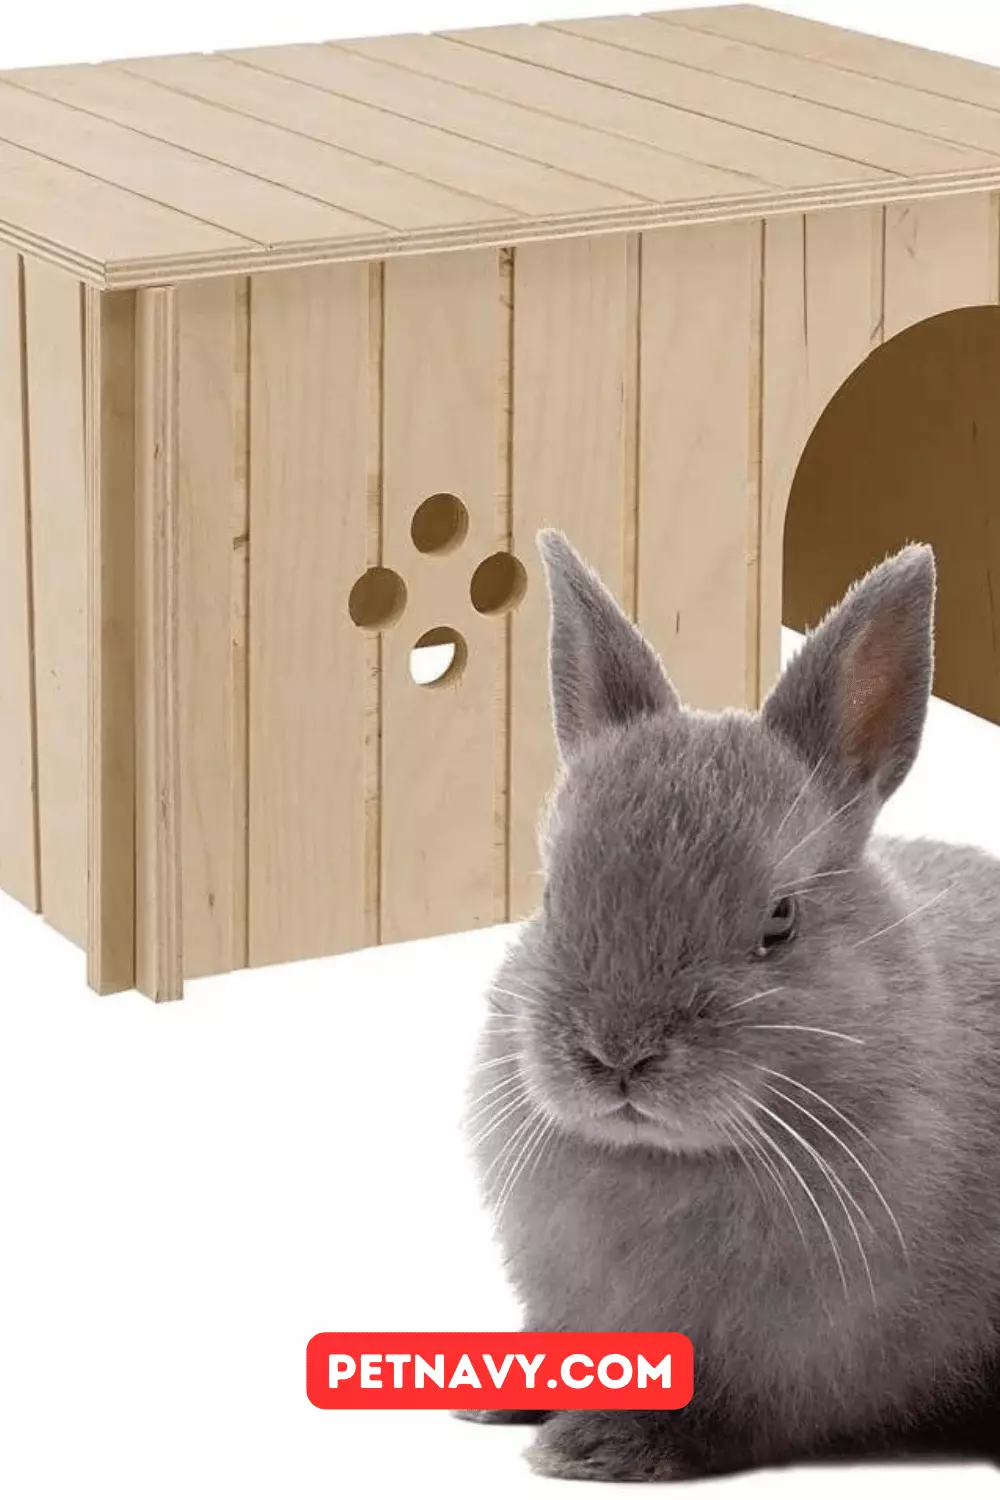 Is It Cruel to Keep a Rabbit in a Hutch?